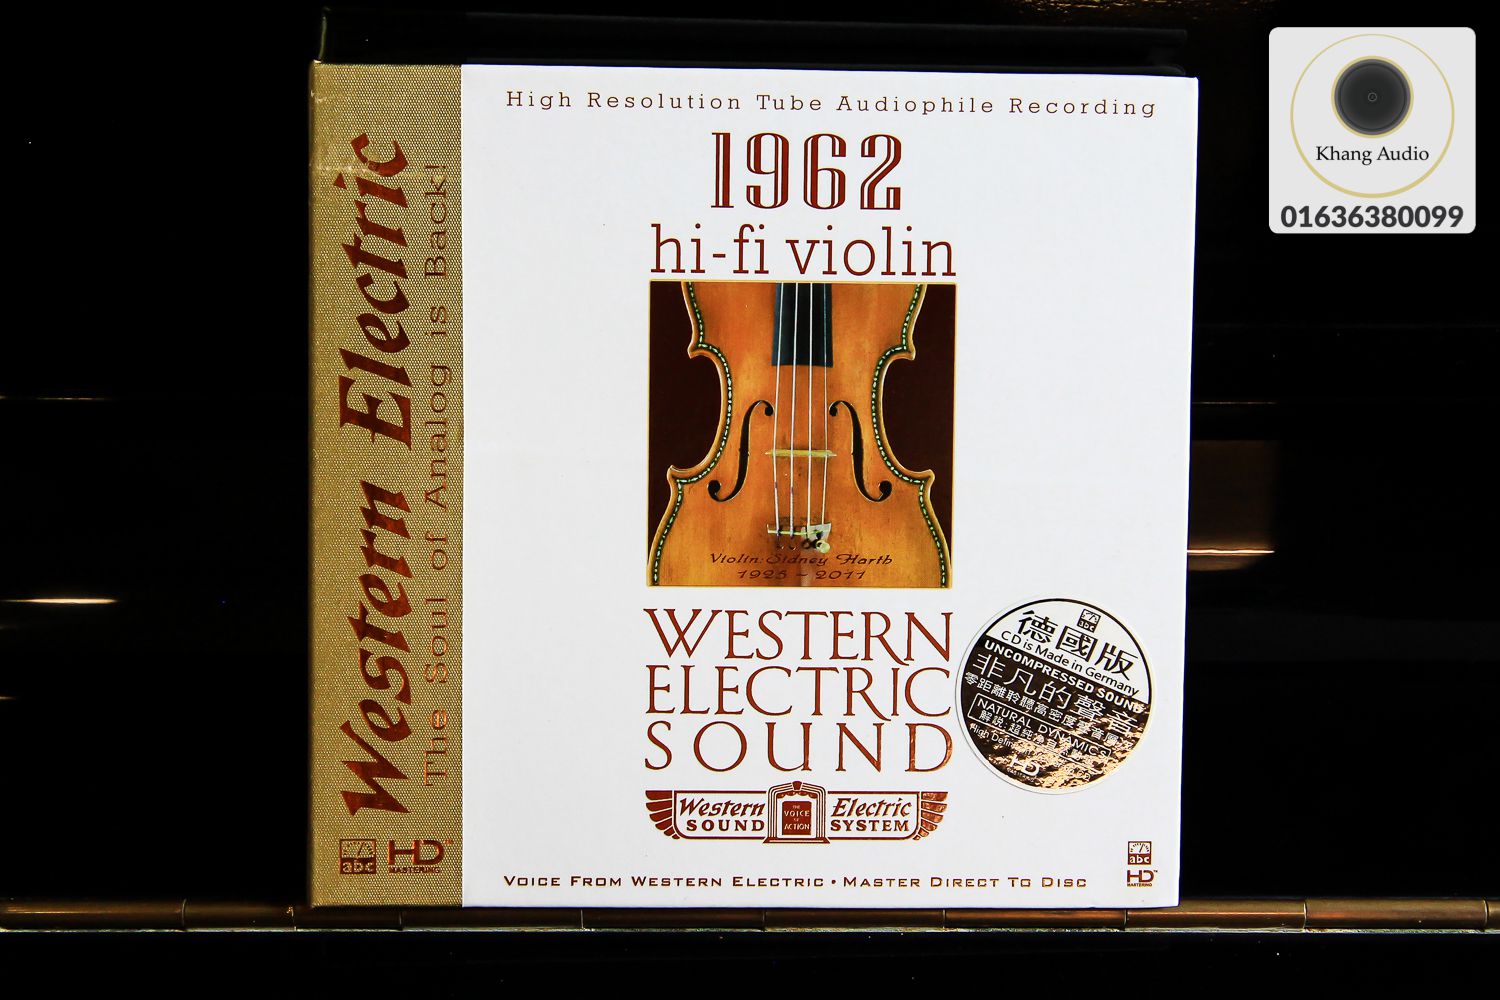 Western Electric Sound - 1962 Hi-Fi Violin HQ Khang Audio 0336380099